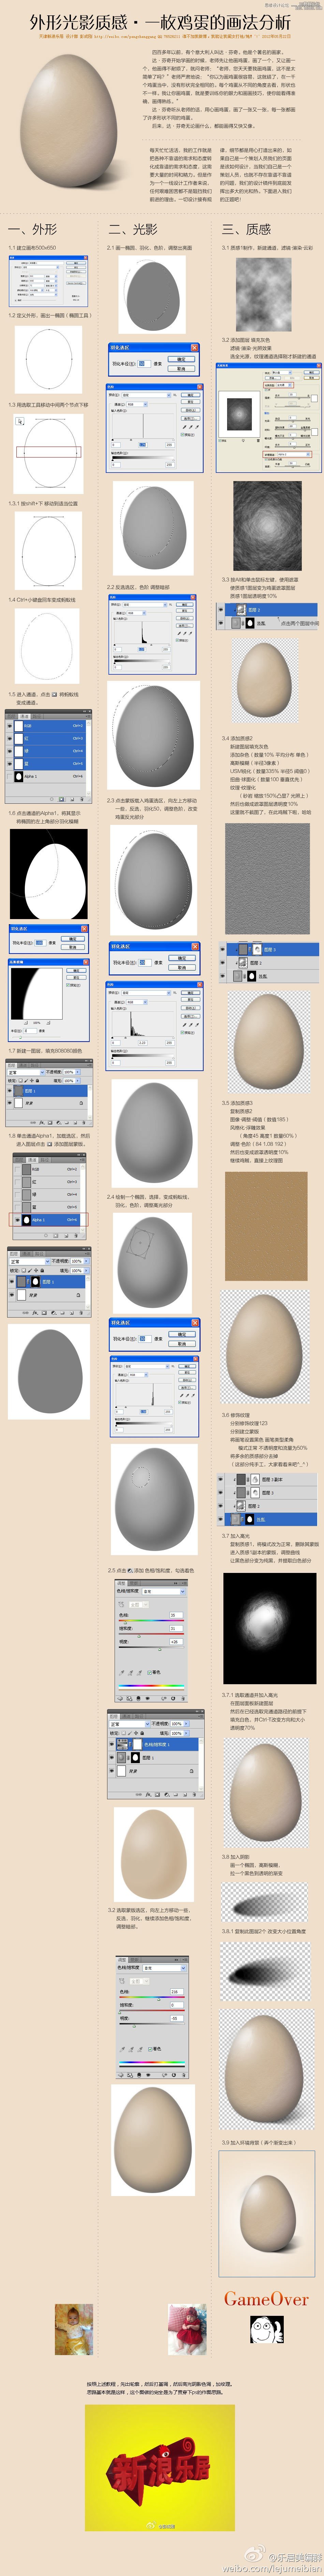 Photoshop通过鸡蛋画法解析外形光影质感,PS教程,16xx8.com教程网